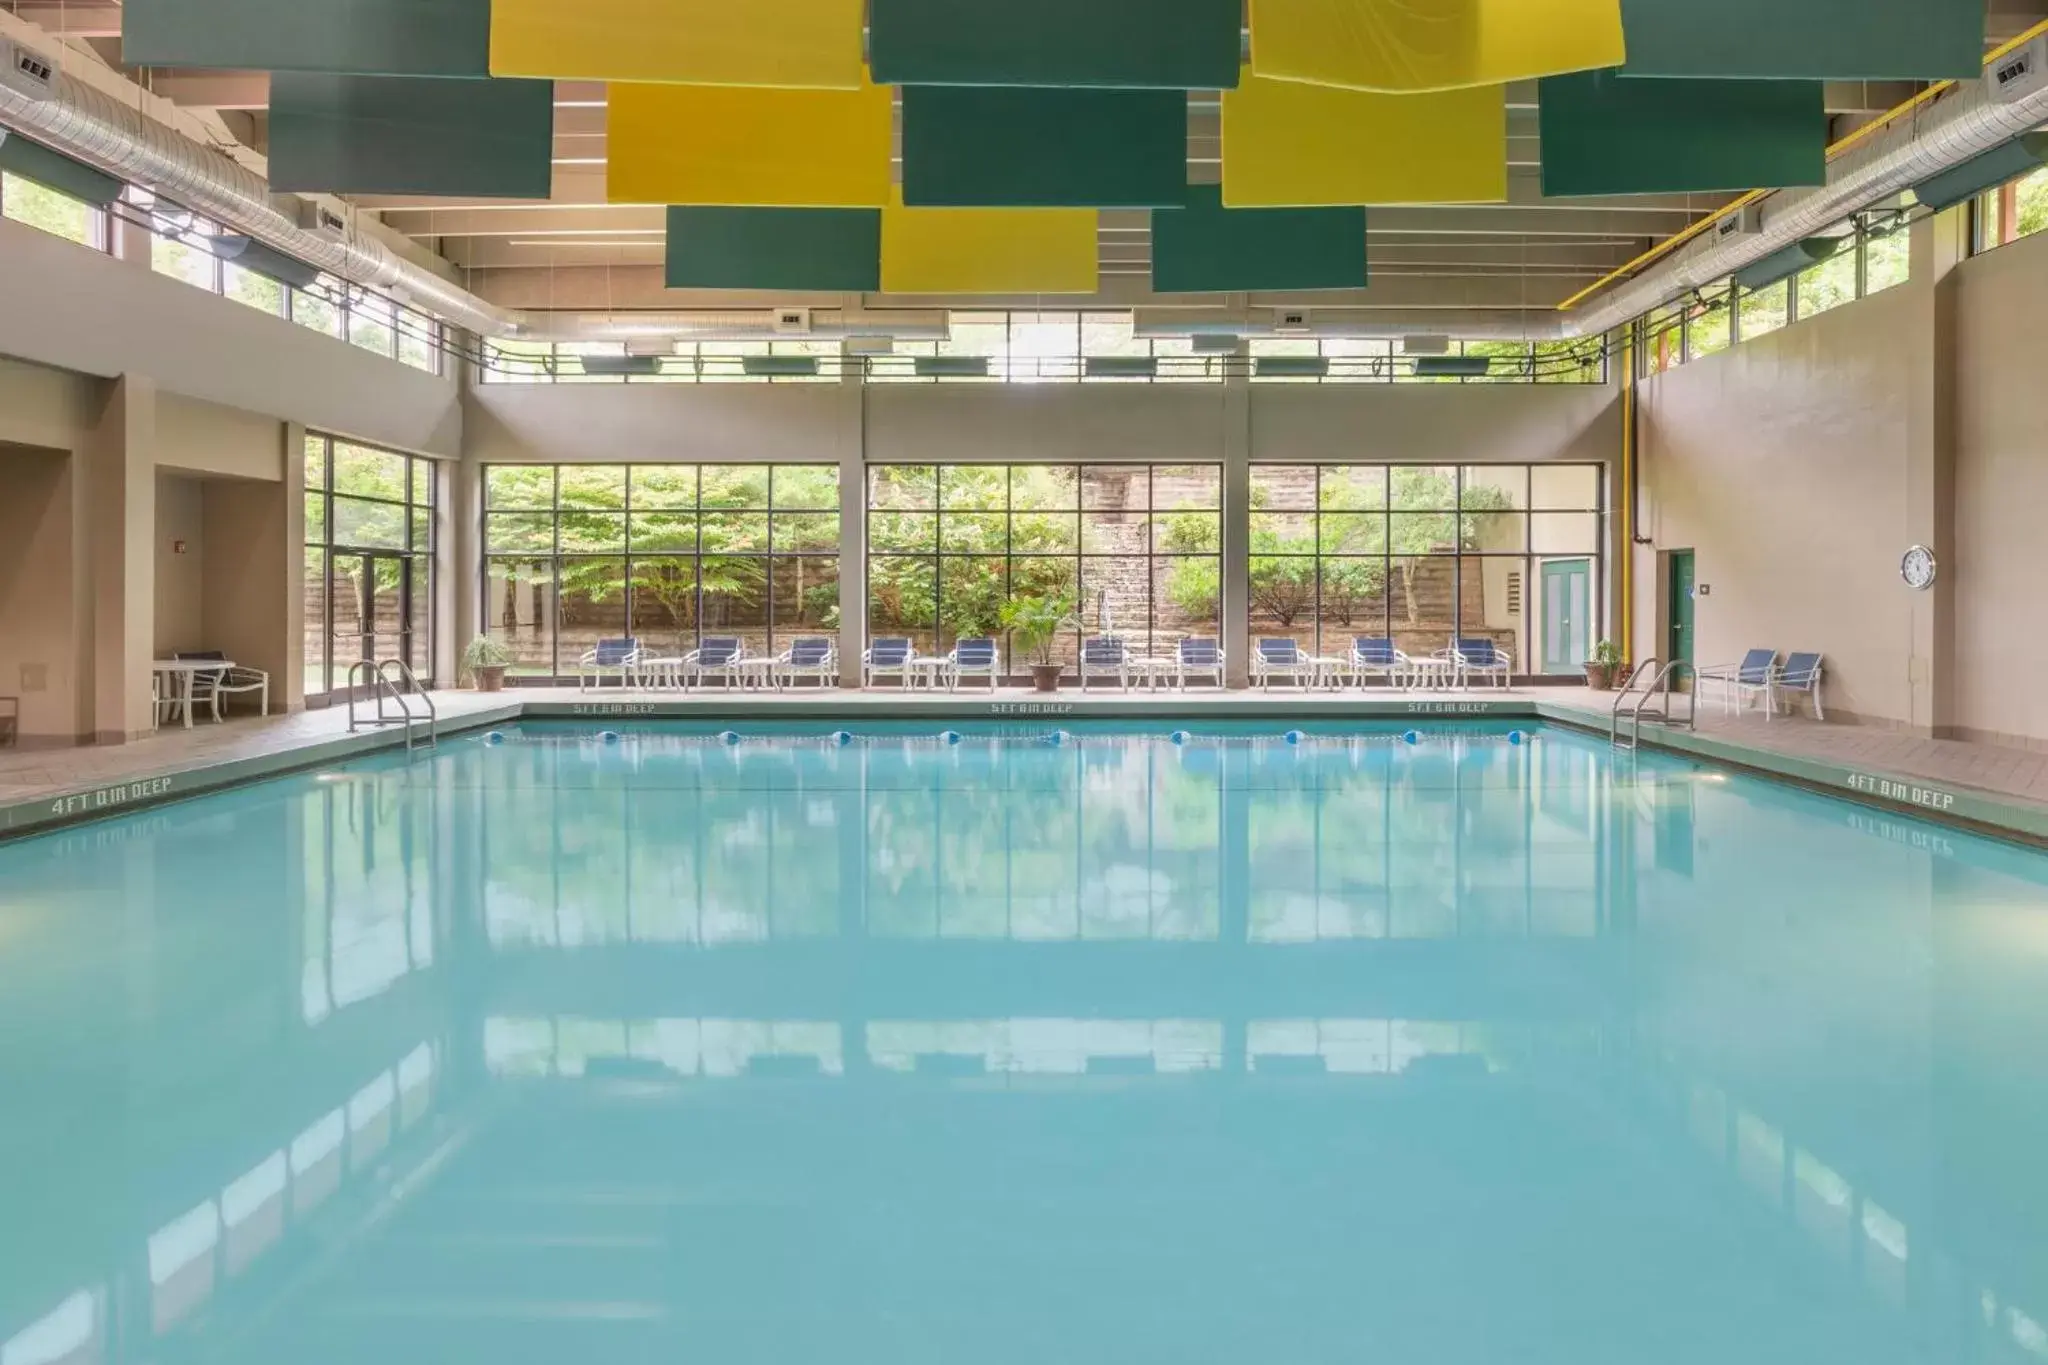 Swimming Pool in The Omni Grove Park Inn - Asheville